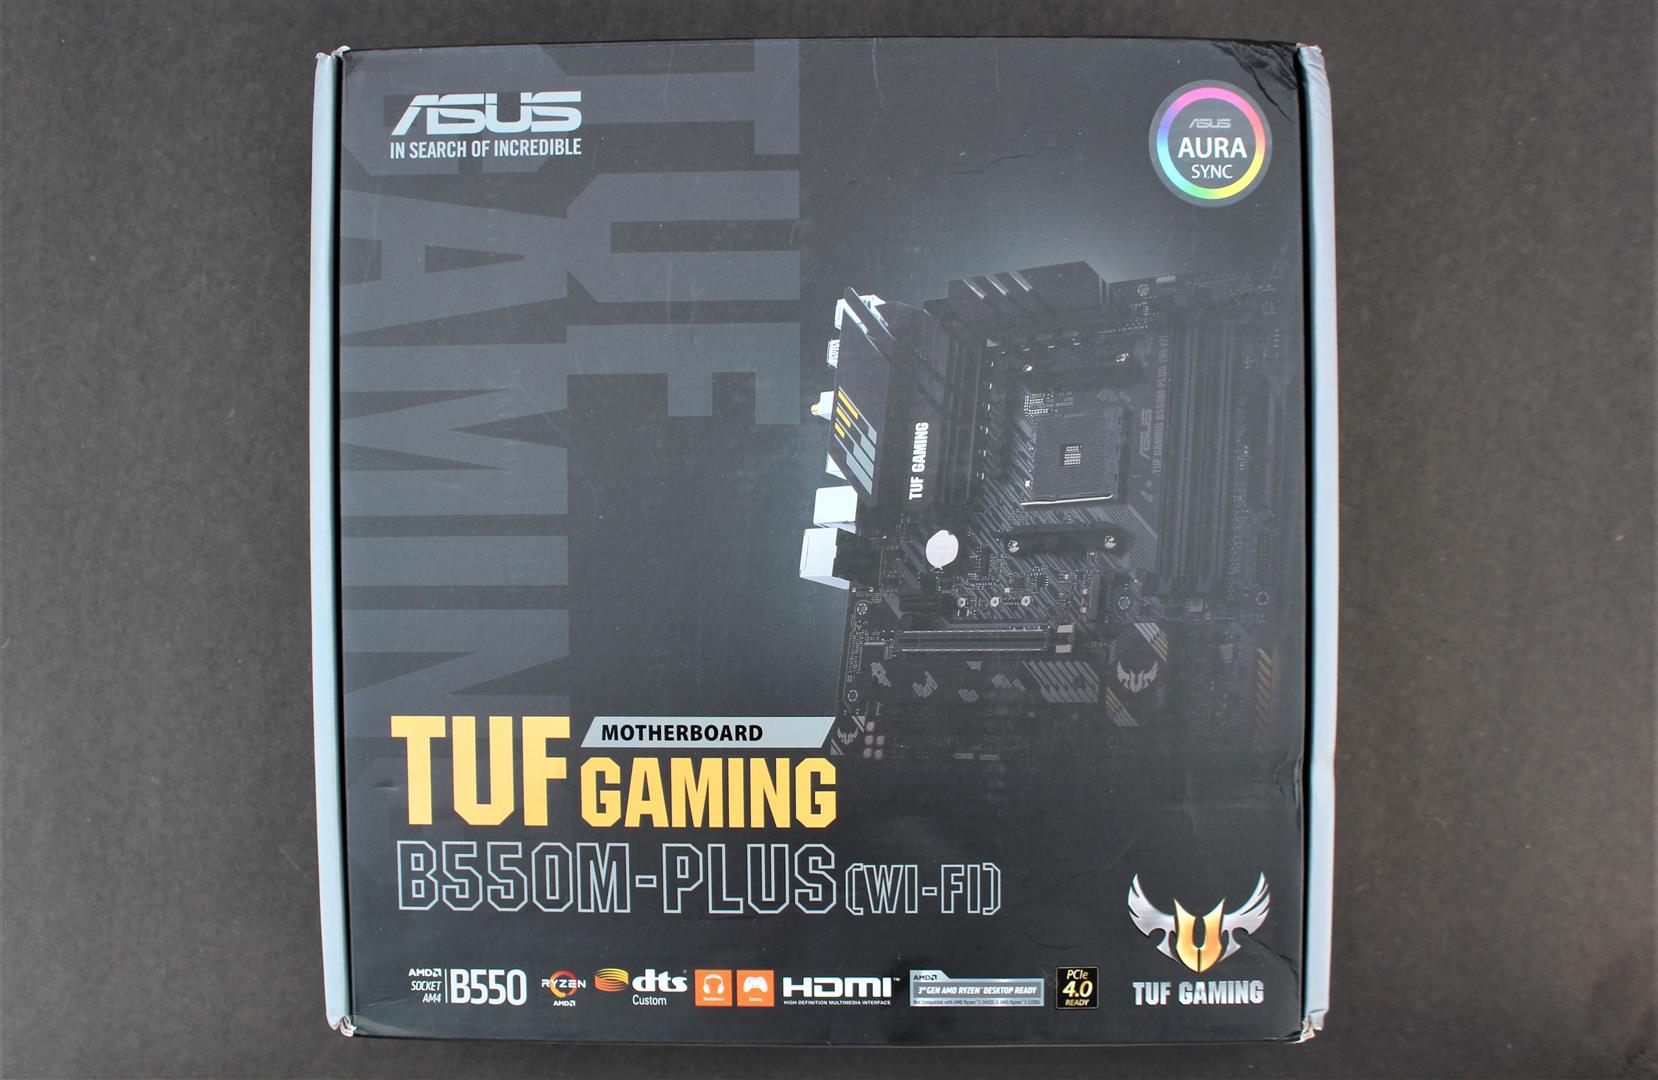 Asus TUF Gaming B550M-Plus (Wi-Fi) Review